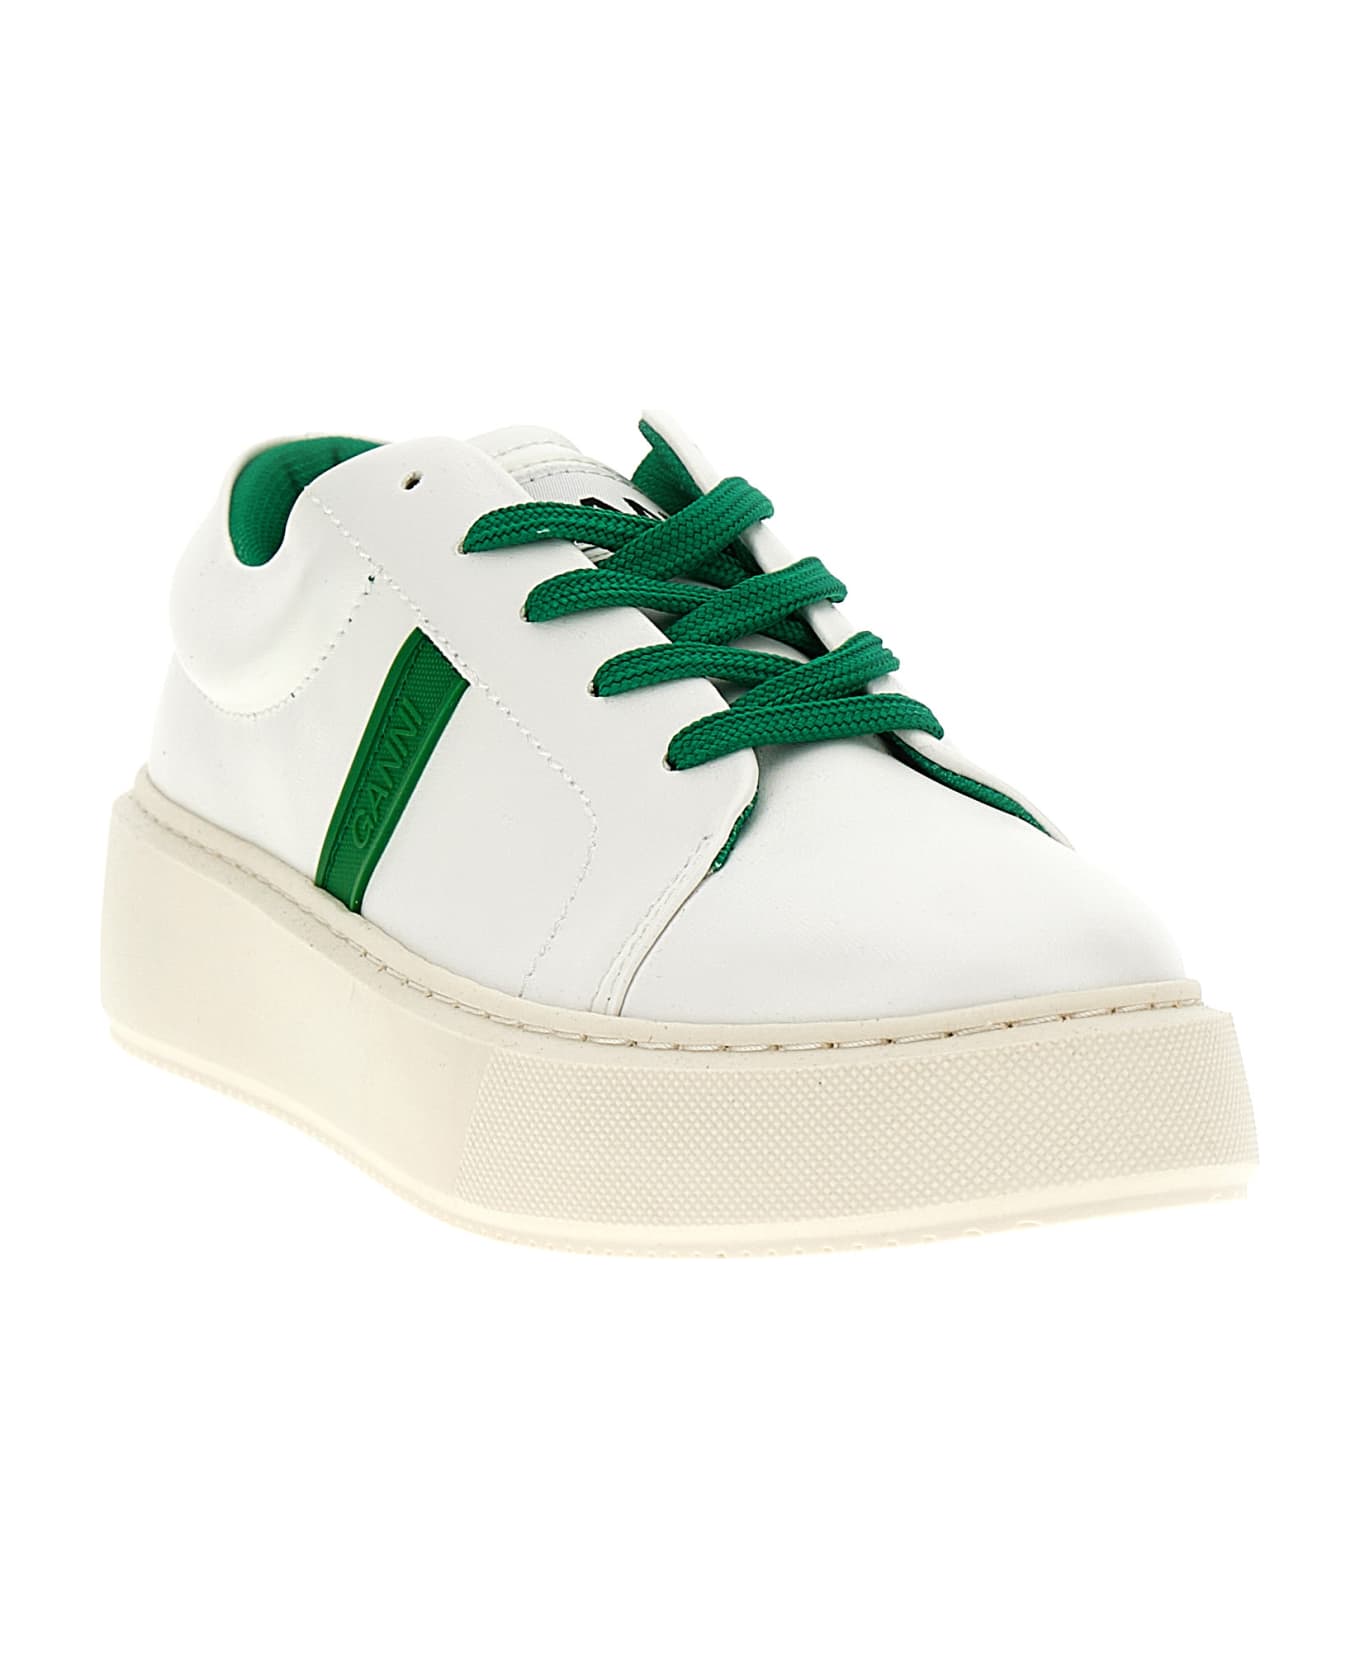 Ganni Logo Sneakers - Green